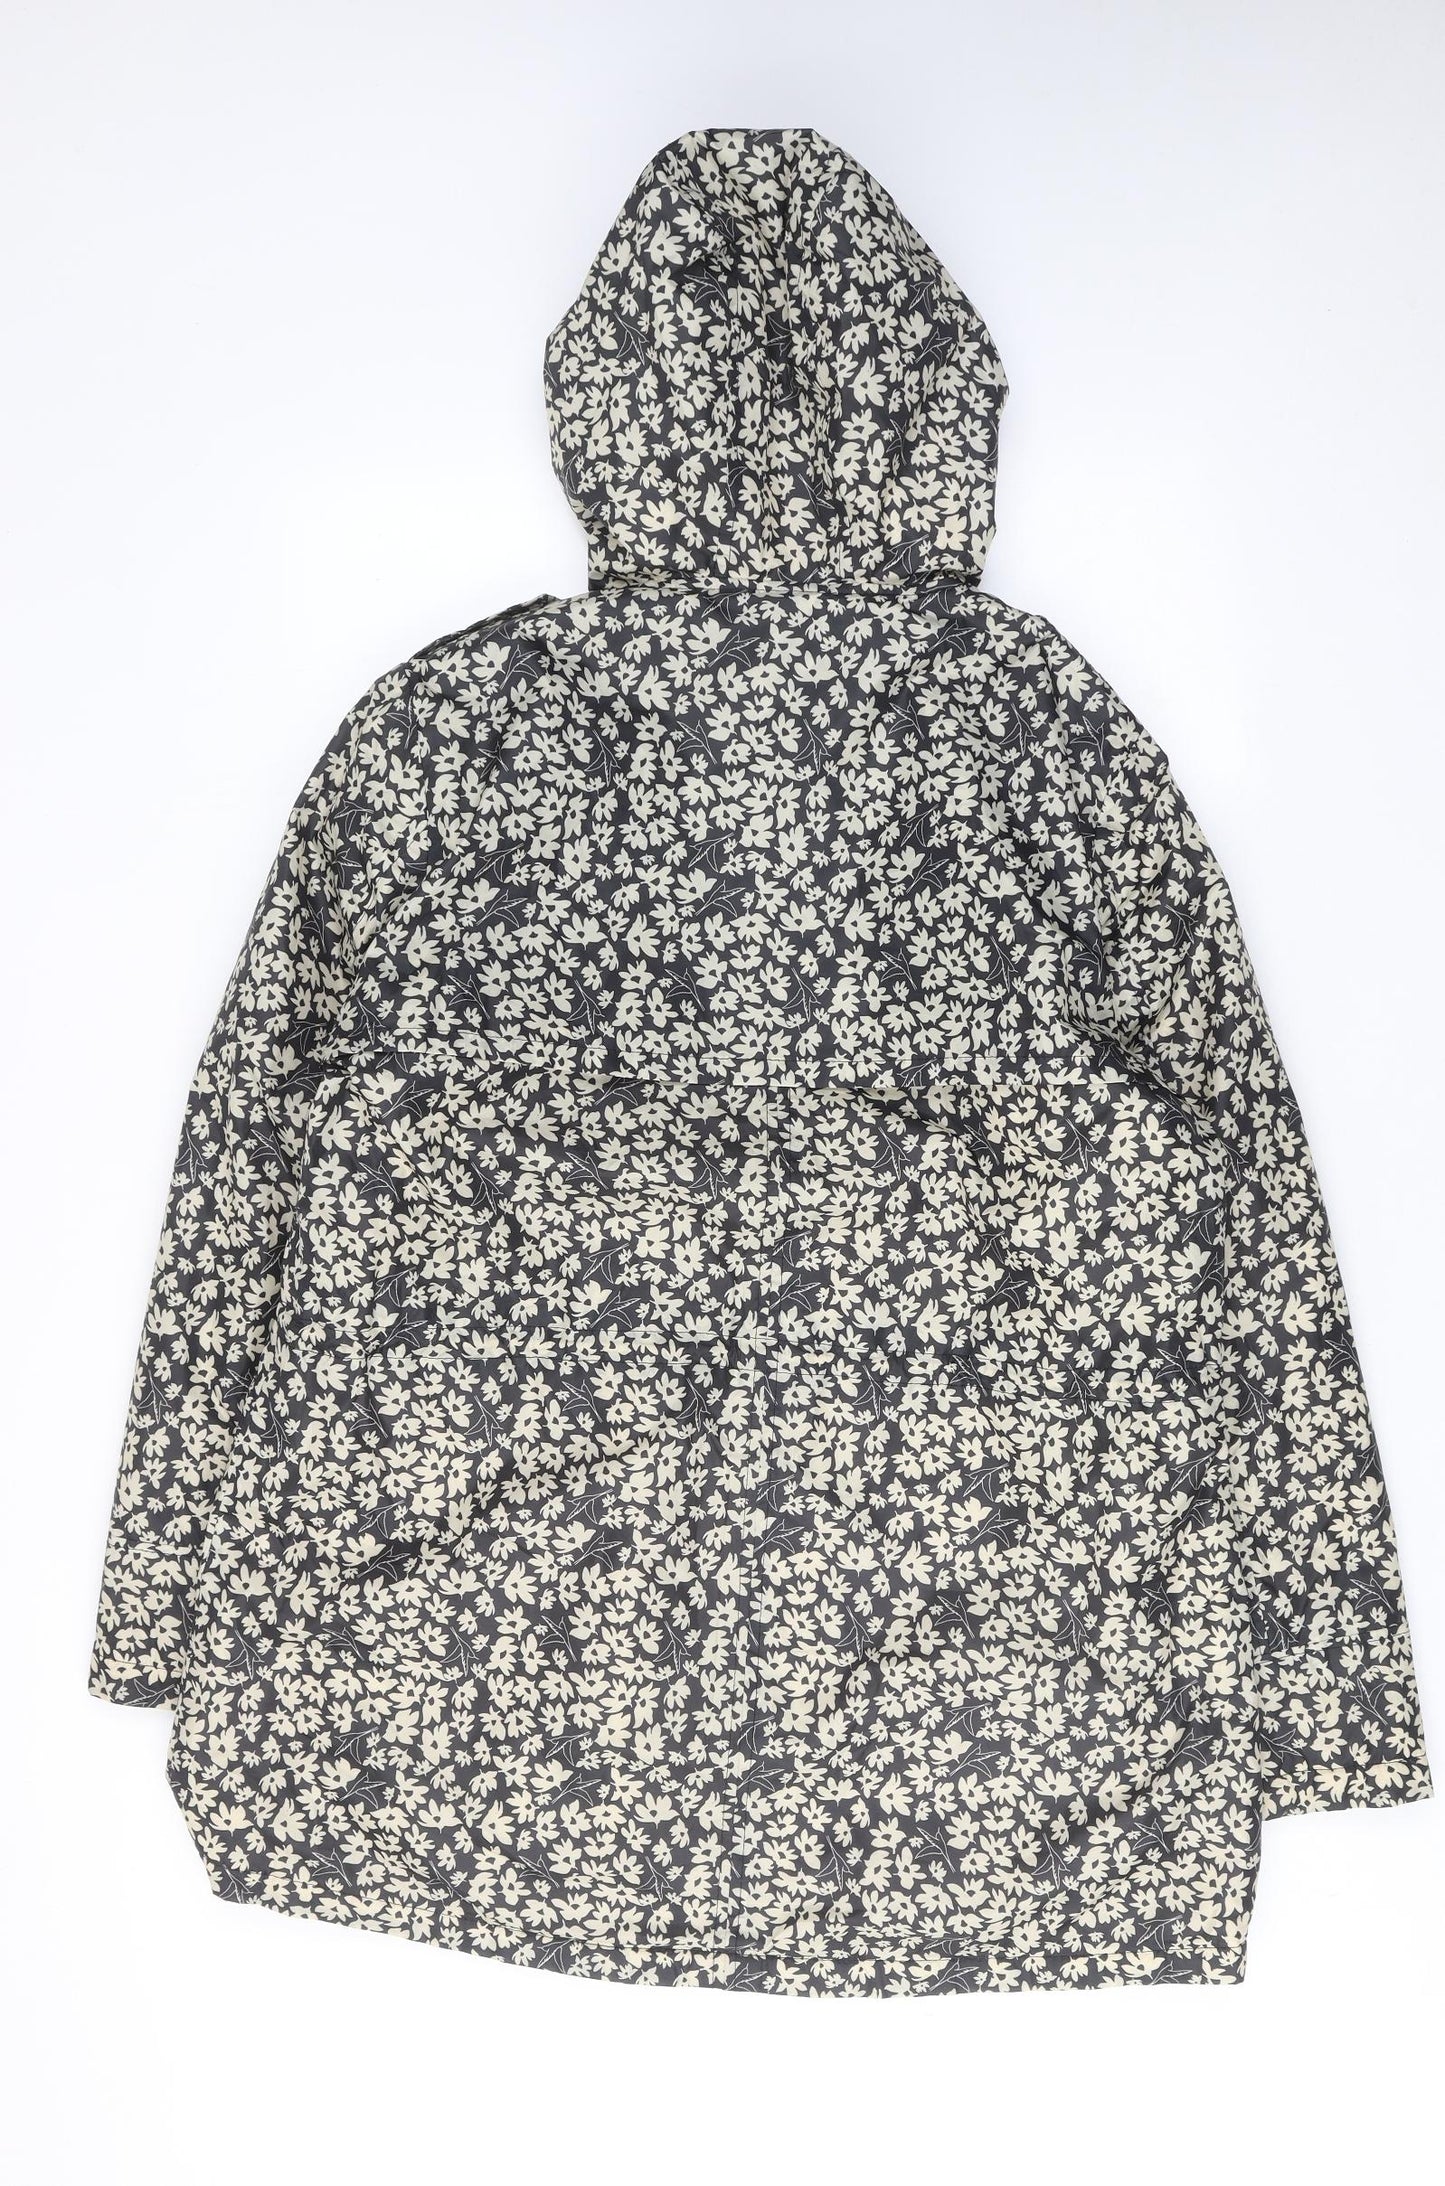 Cotton Traders Womens Black Floral Rain Coat Coat Size 16 Zip